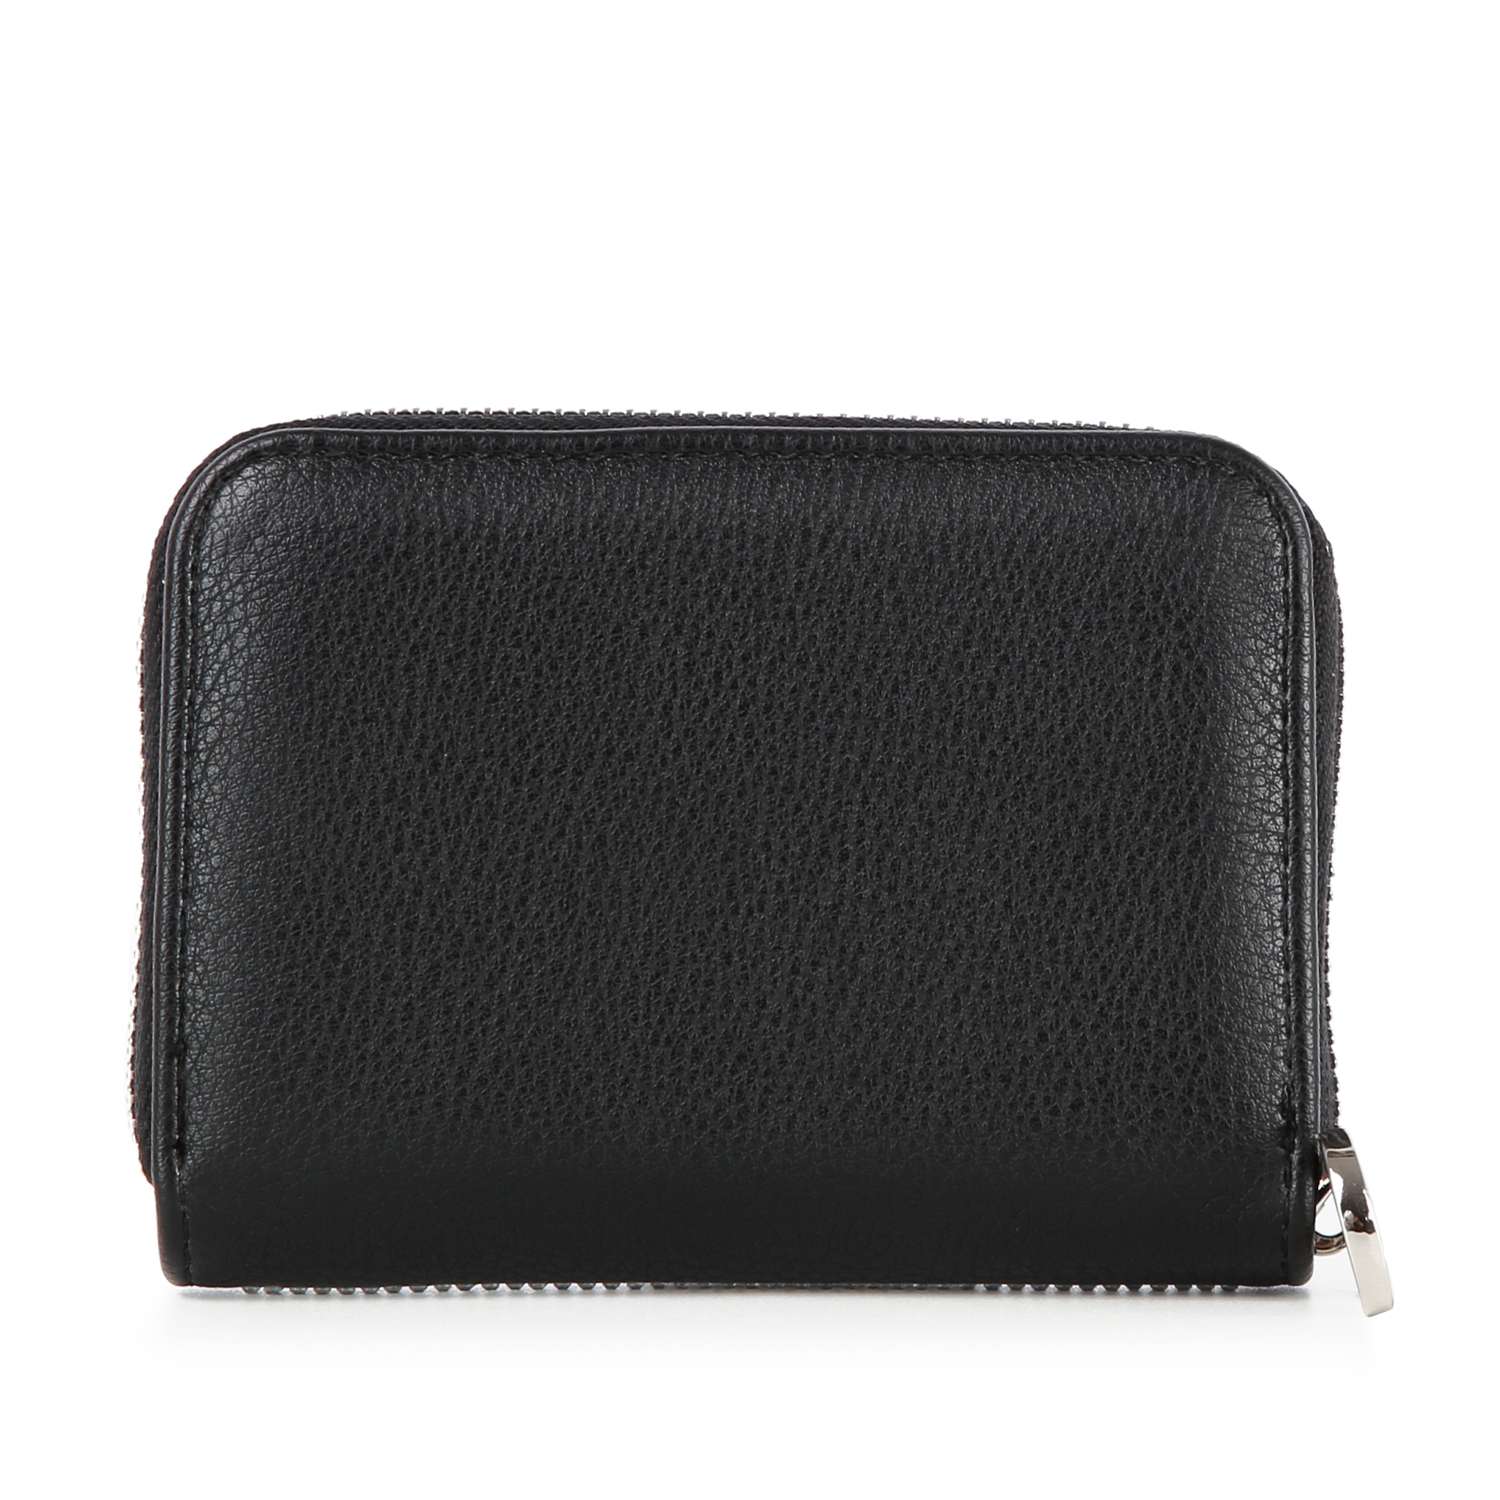 Rhinestone Design Petite Zip Around Wallet: Black